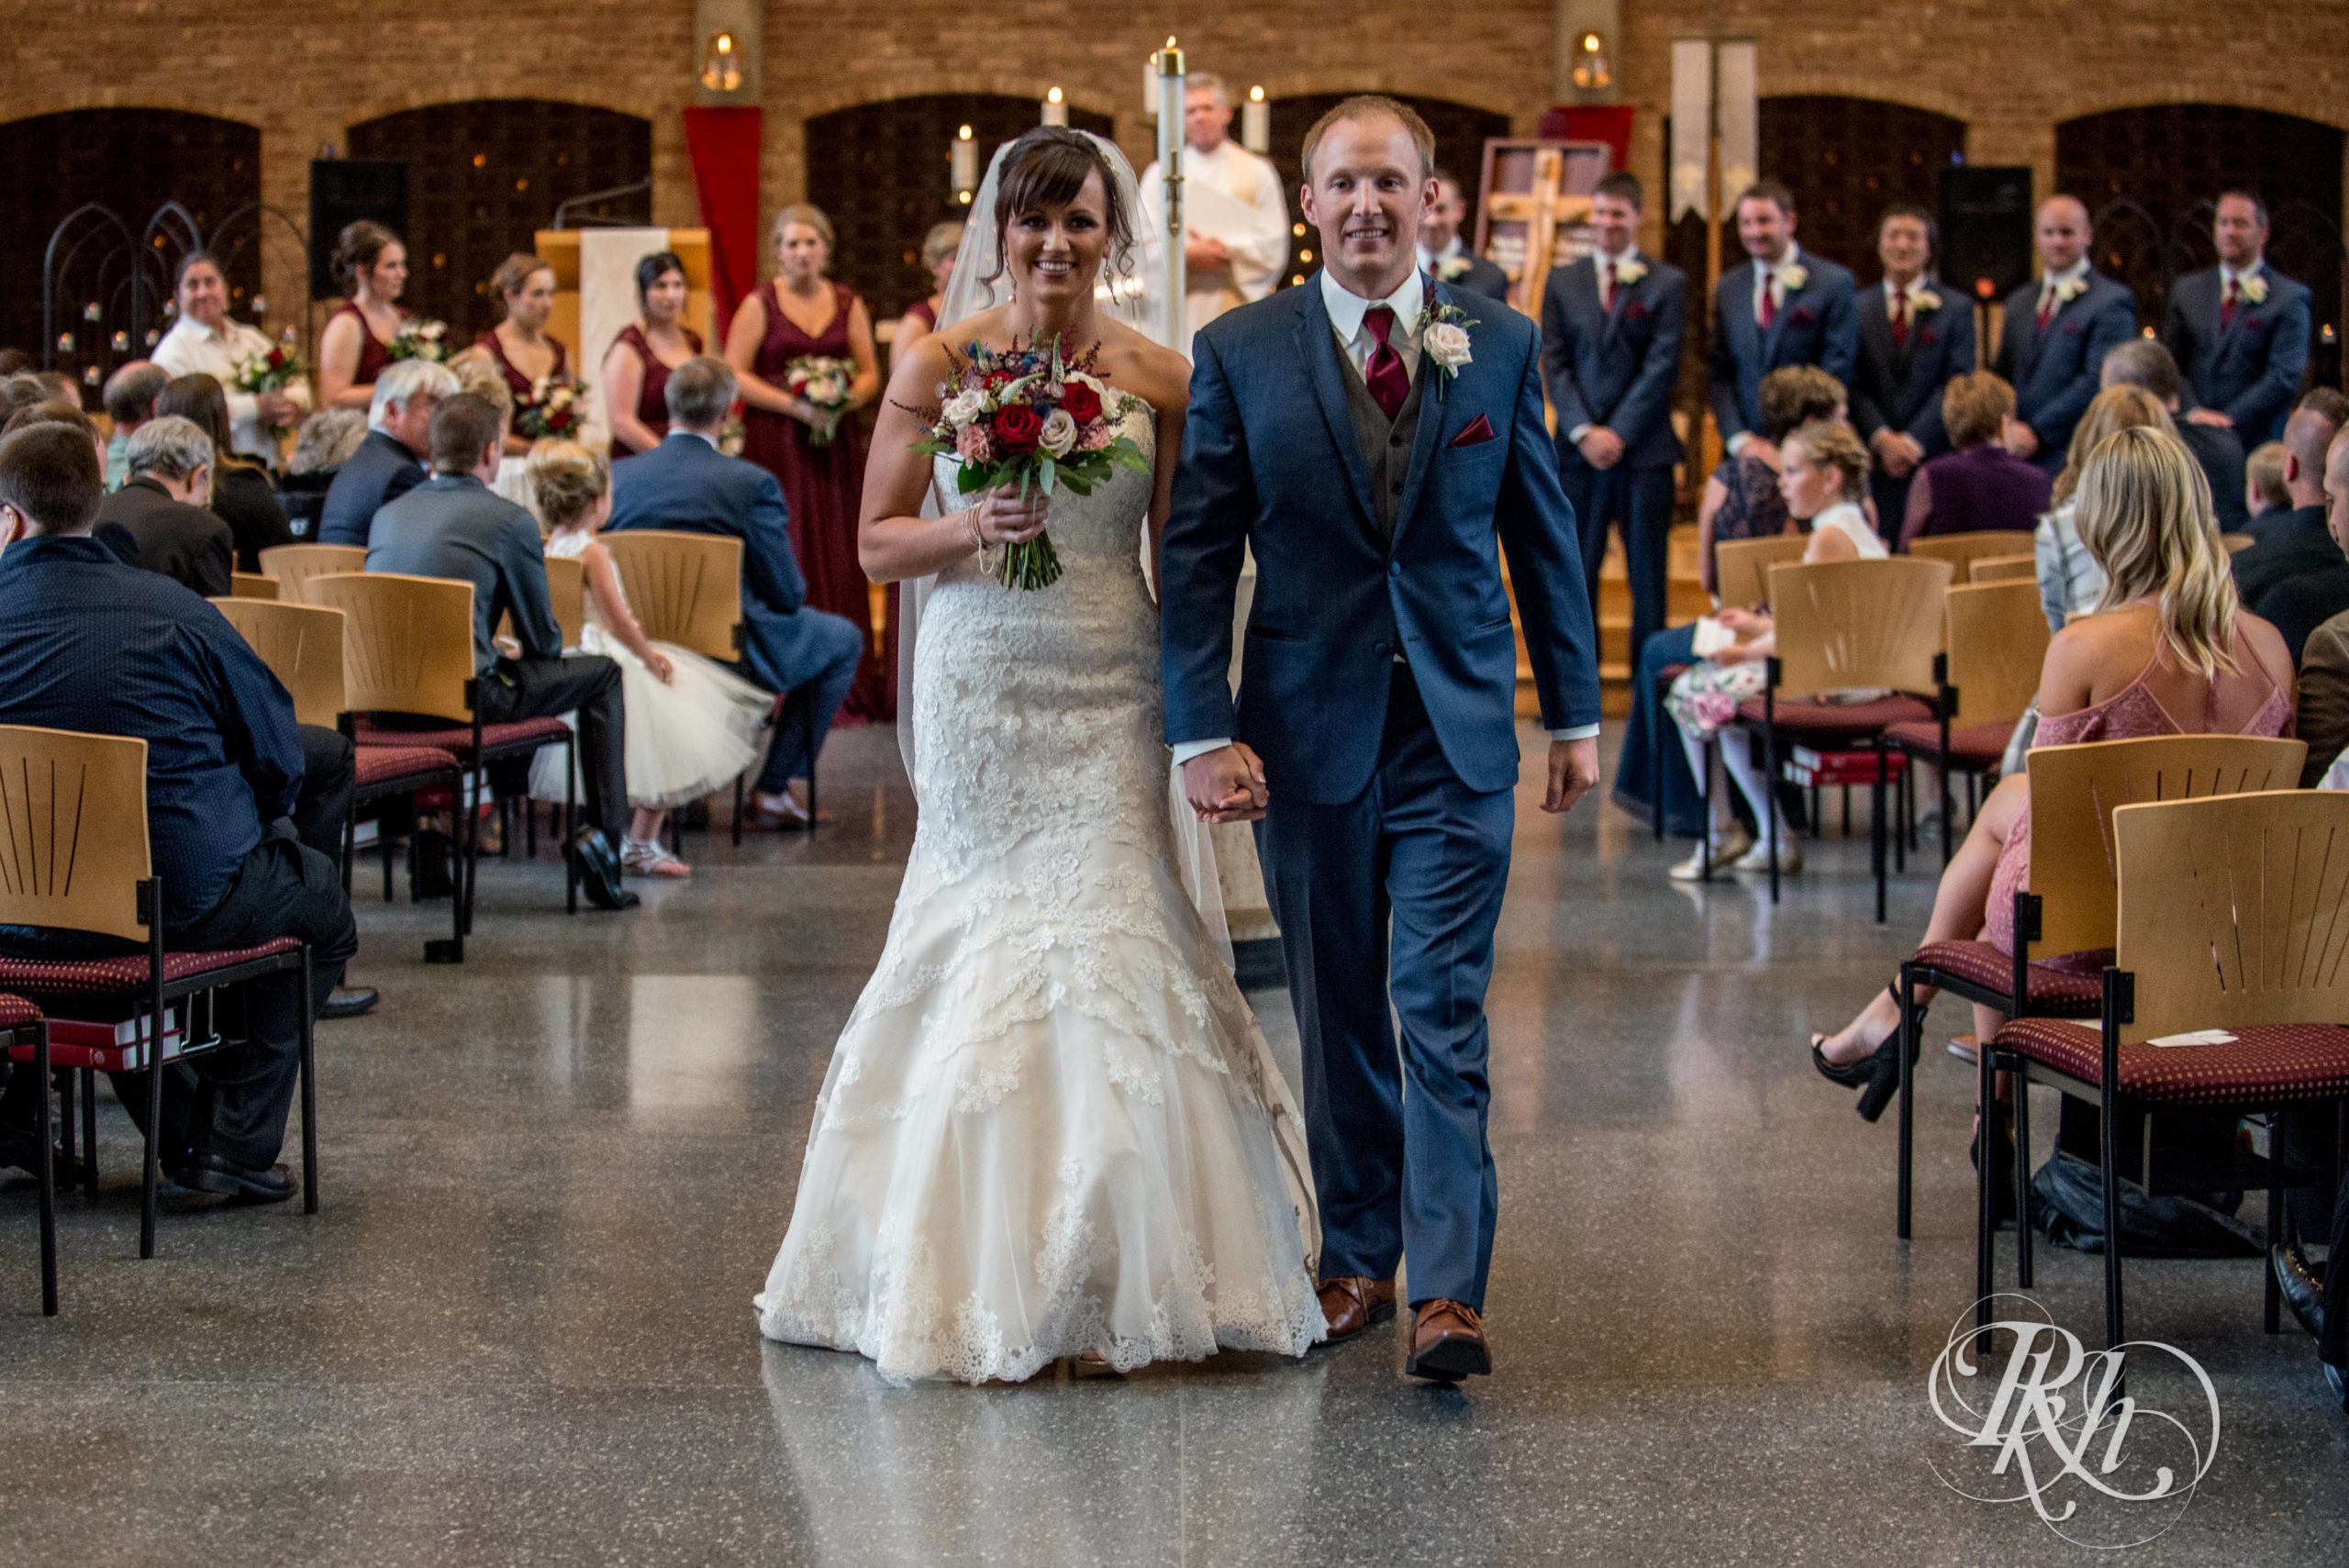 Bride and groom walk down aisle at church wedding ceremony in Minneapolis, Minnesota.